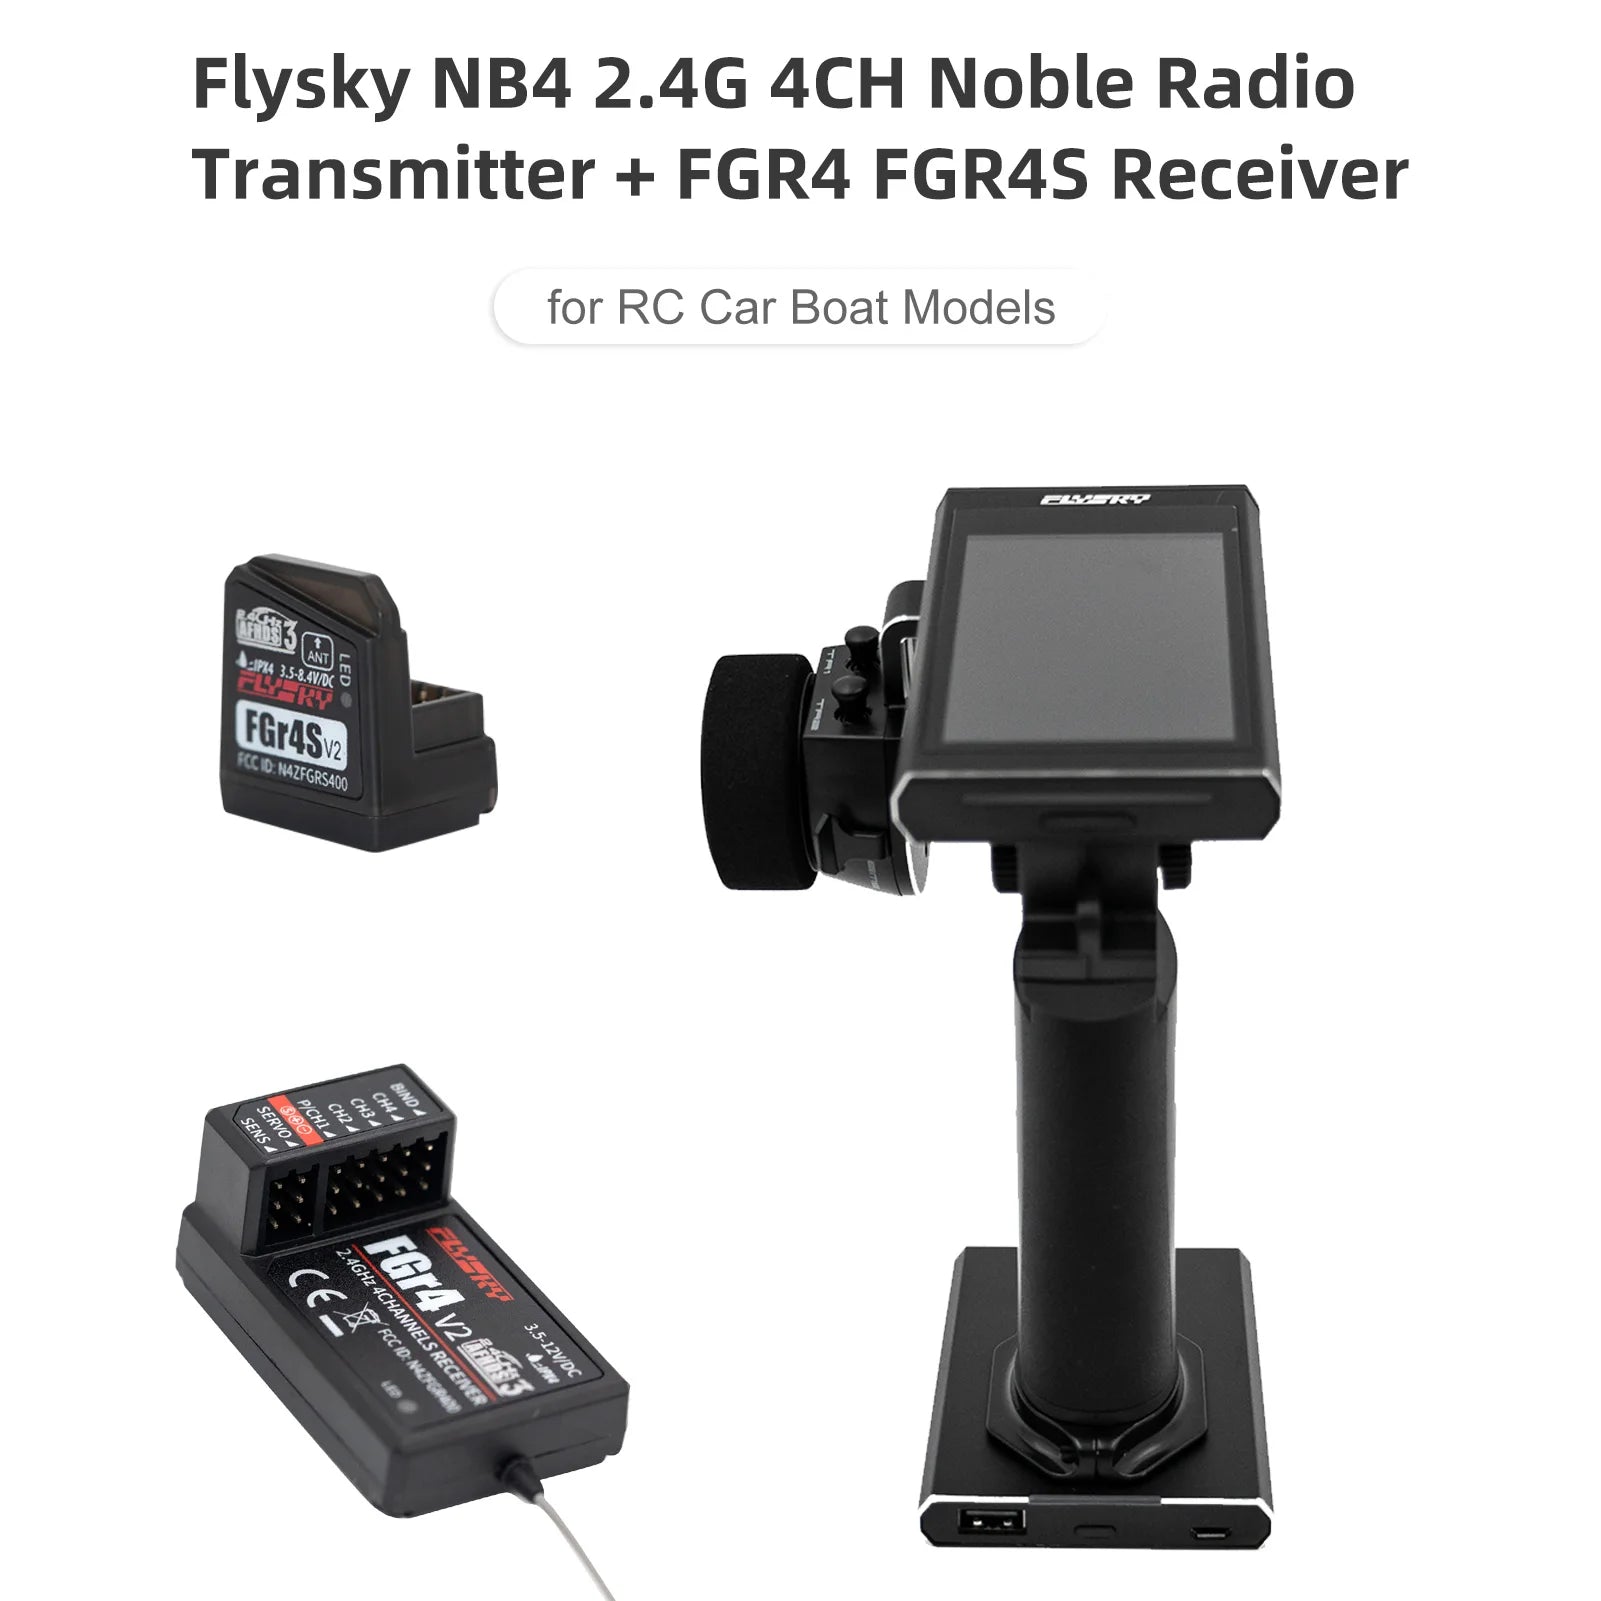 Flysky Noble NB4 2.4G 4CH Radio Transmitter, Never grip the transmitter antenna during operation